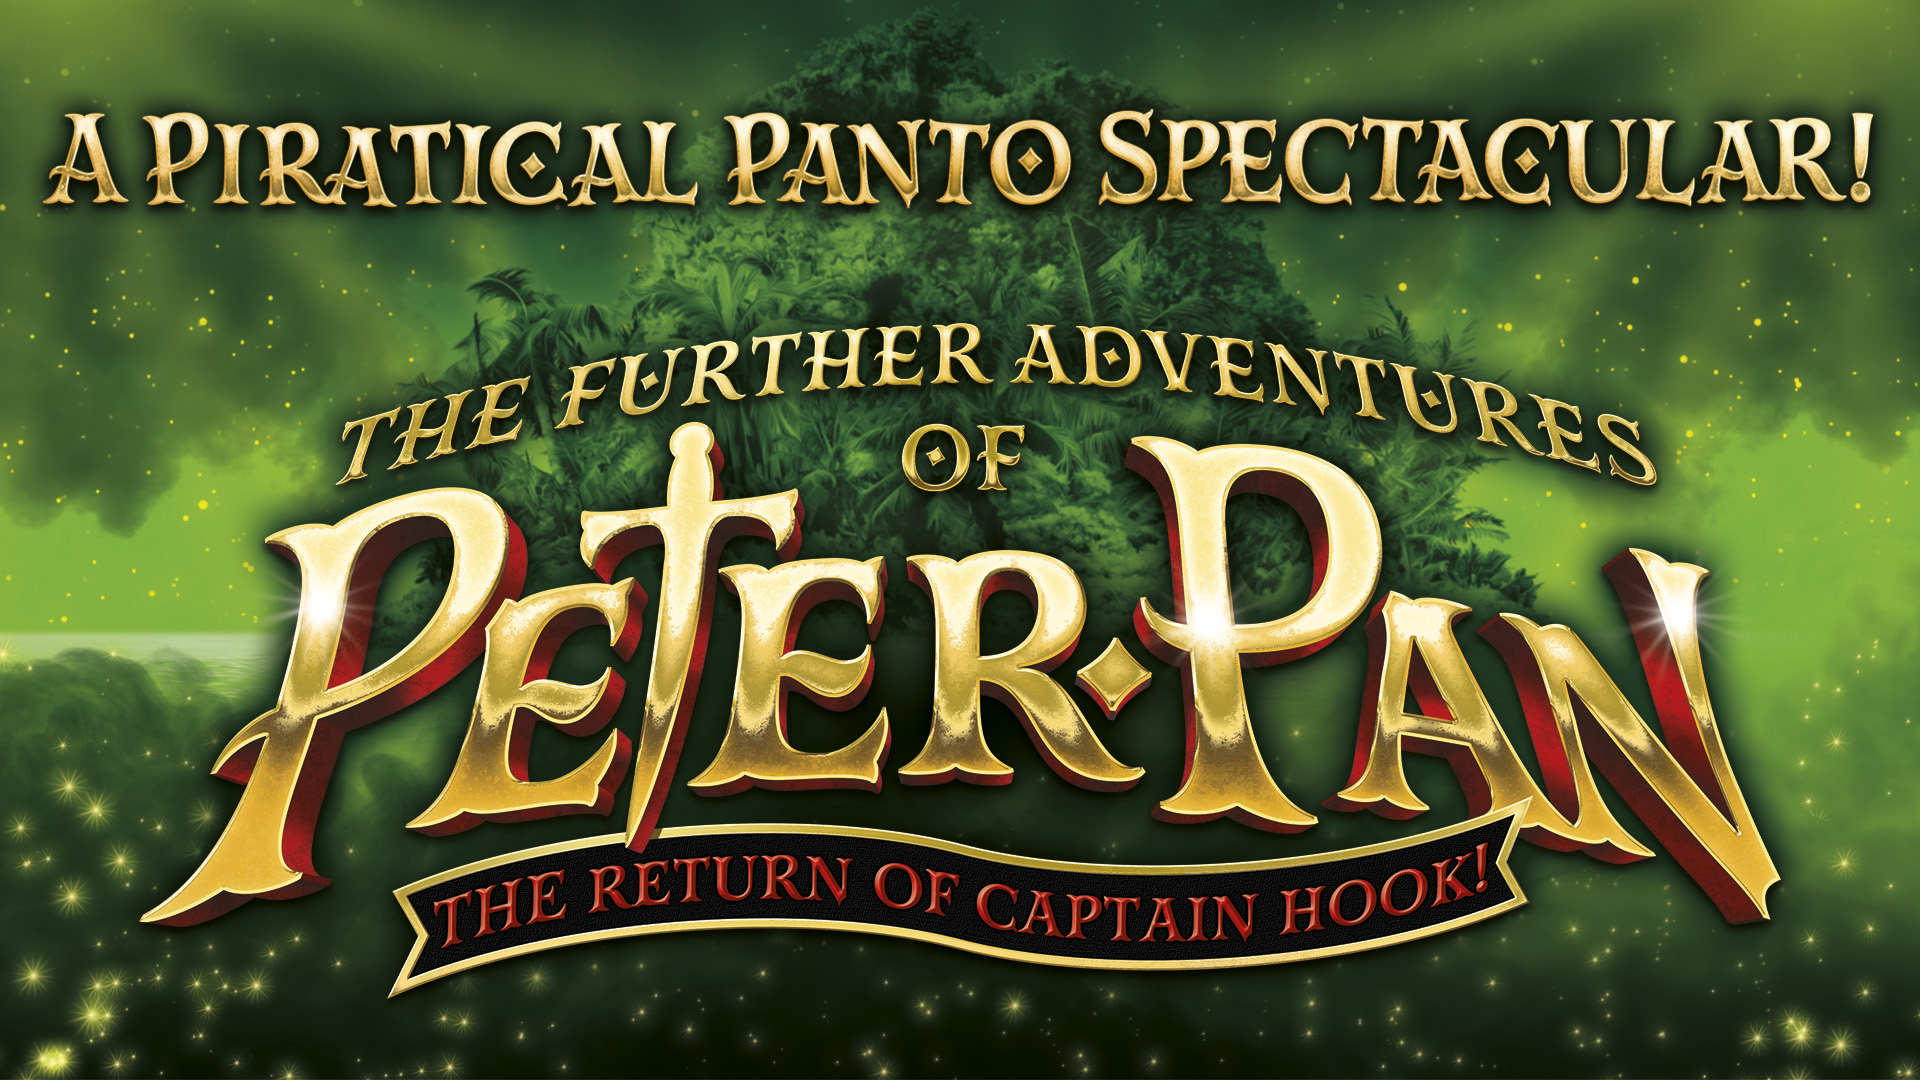 The Further Adventures of Peter Pan: The Return of Captain Hook @ Aylesbury Waterside Theatre